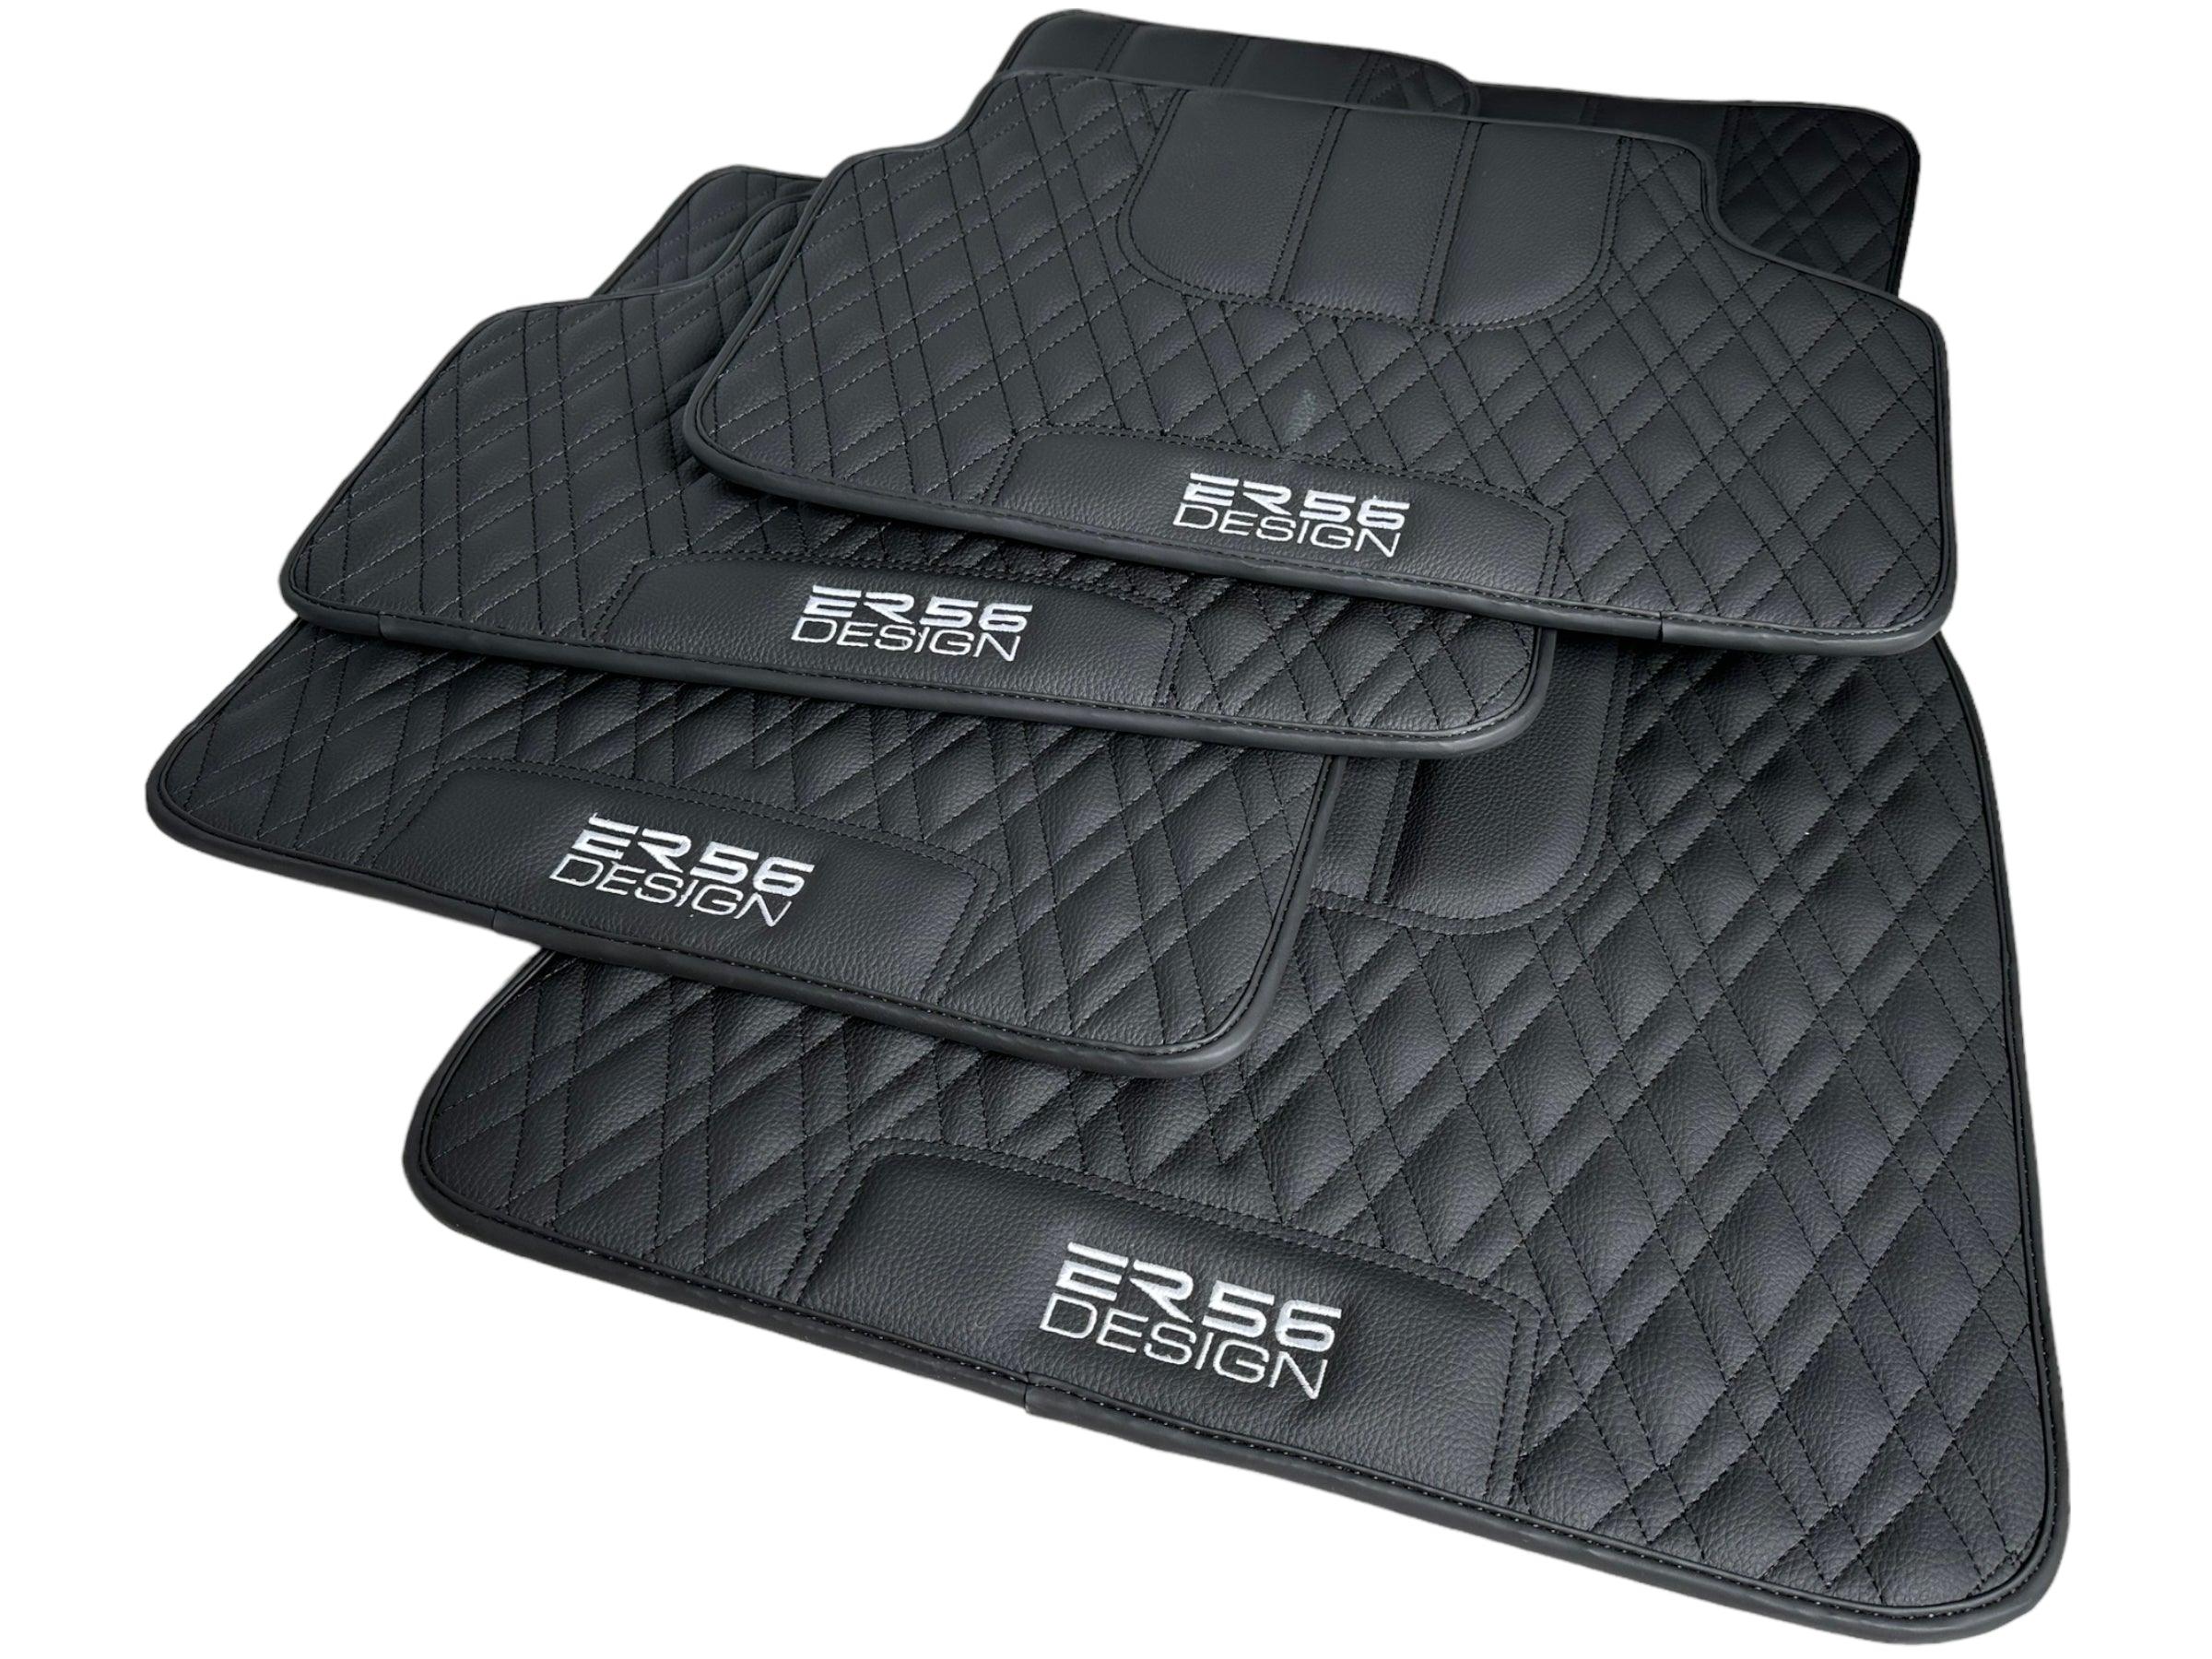 Floor Mats For BMW M3 E92 Black Leather Er56 Design - AutoWin